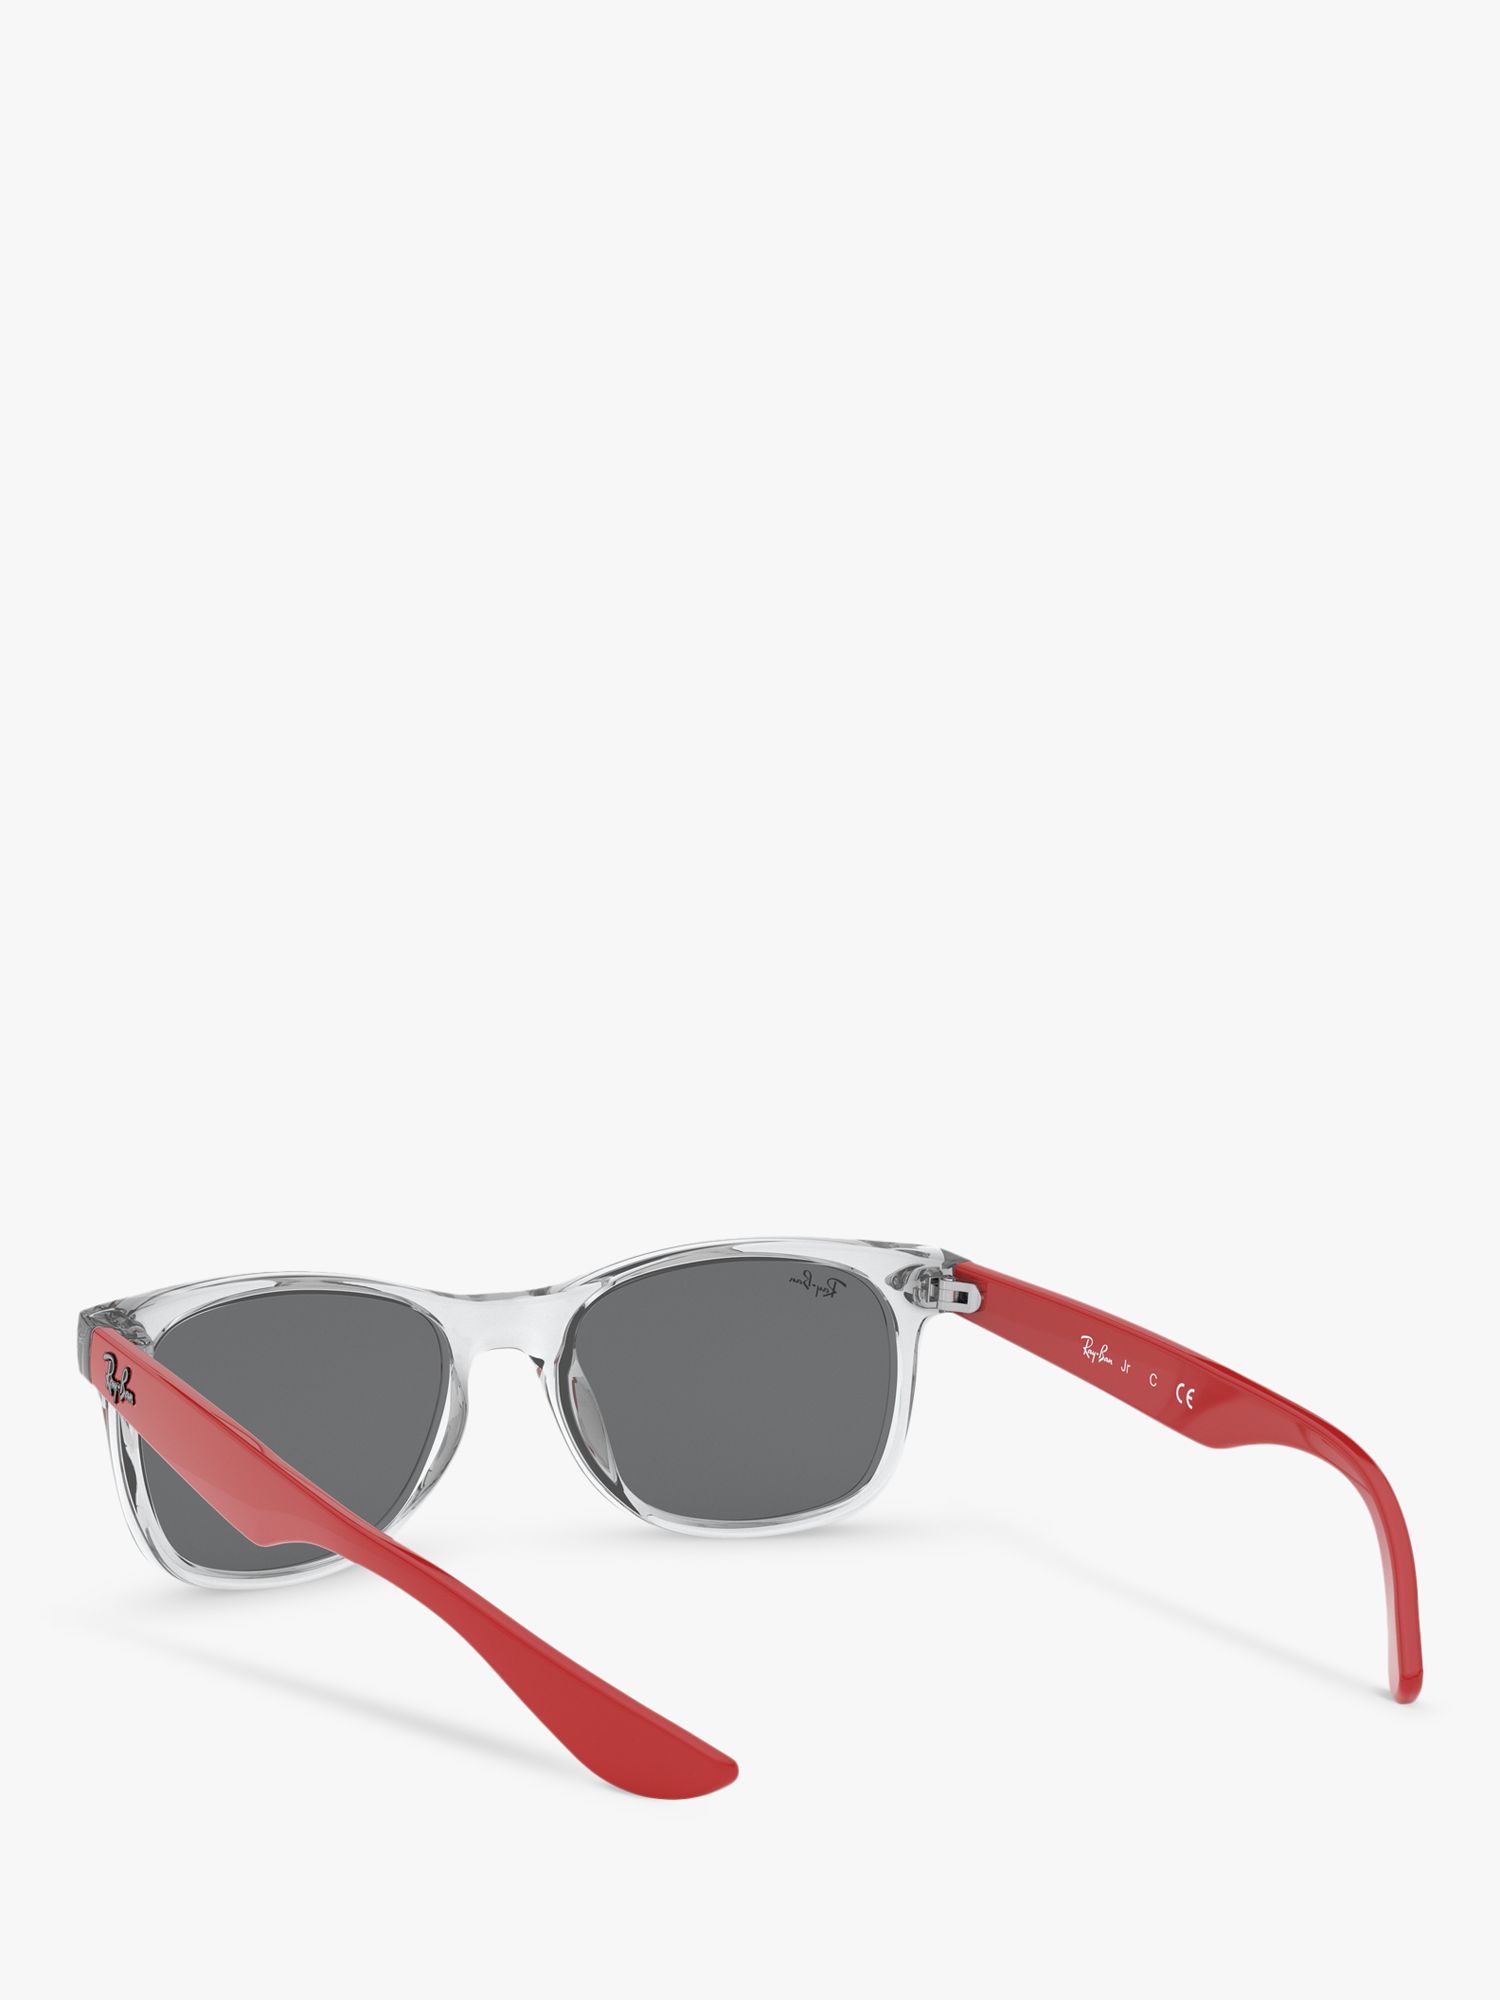 Buy Ray-Ban RJ9052S Kids' Unisex Square Sunglasses, Transparent Grey/Mirror Grey Online at johnlewis.com